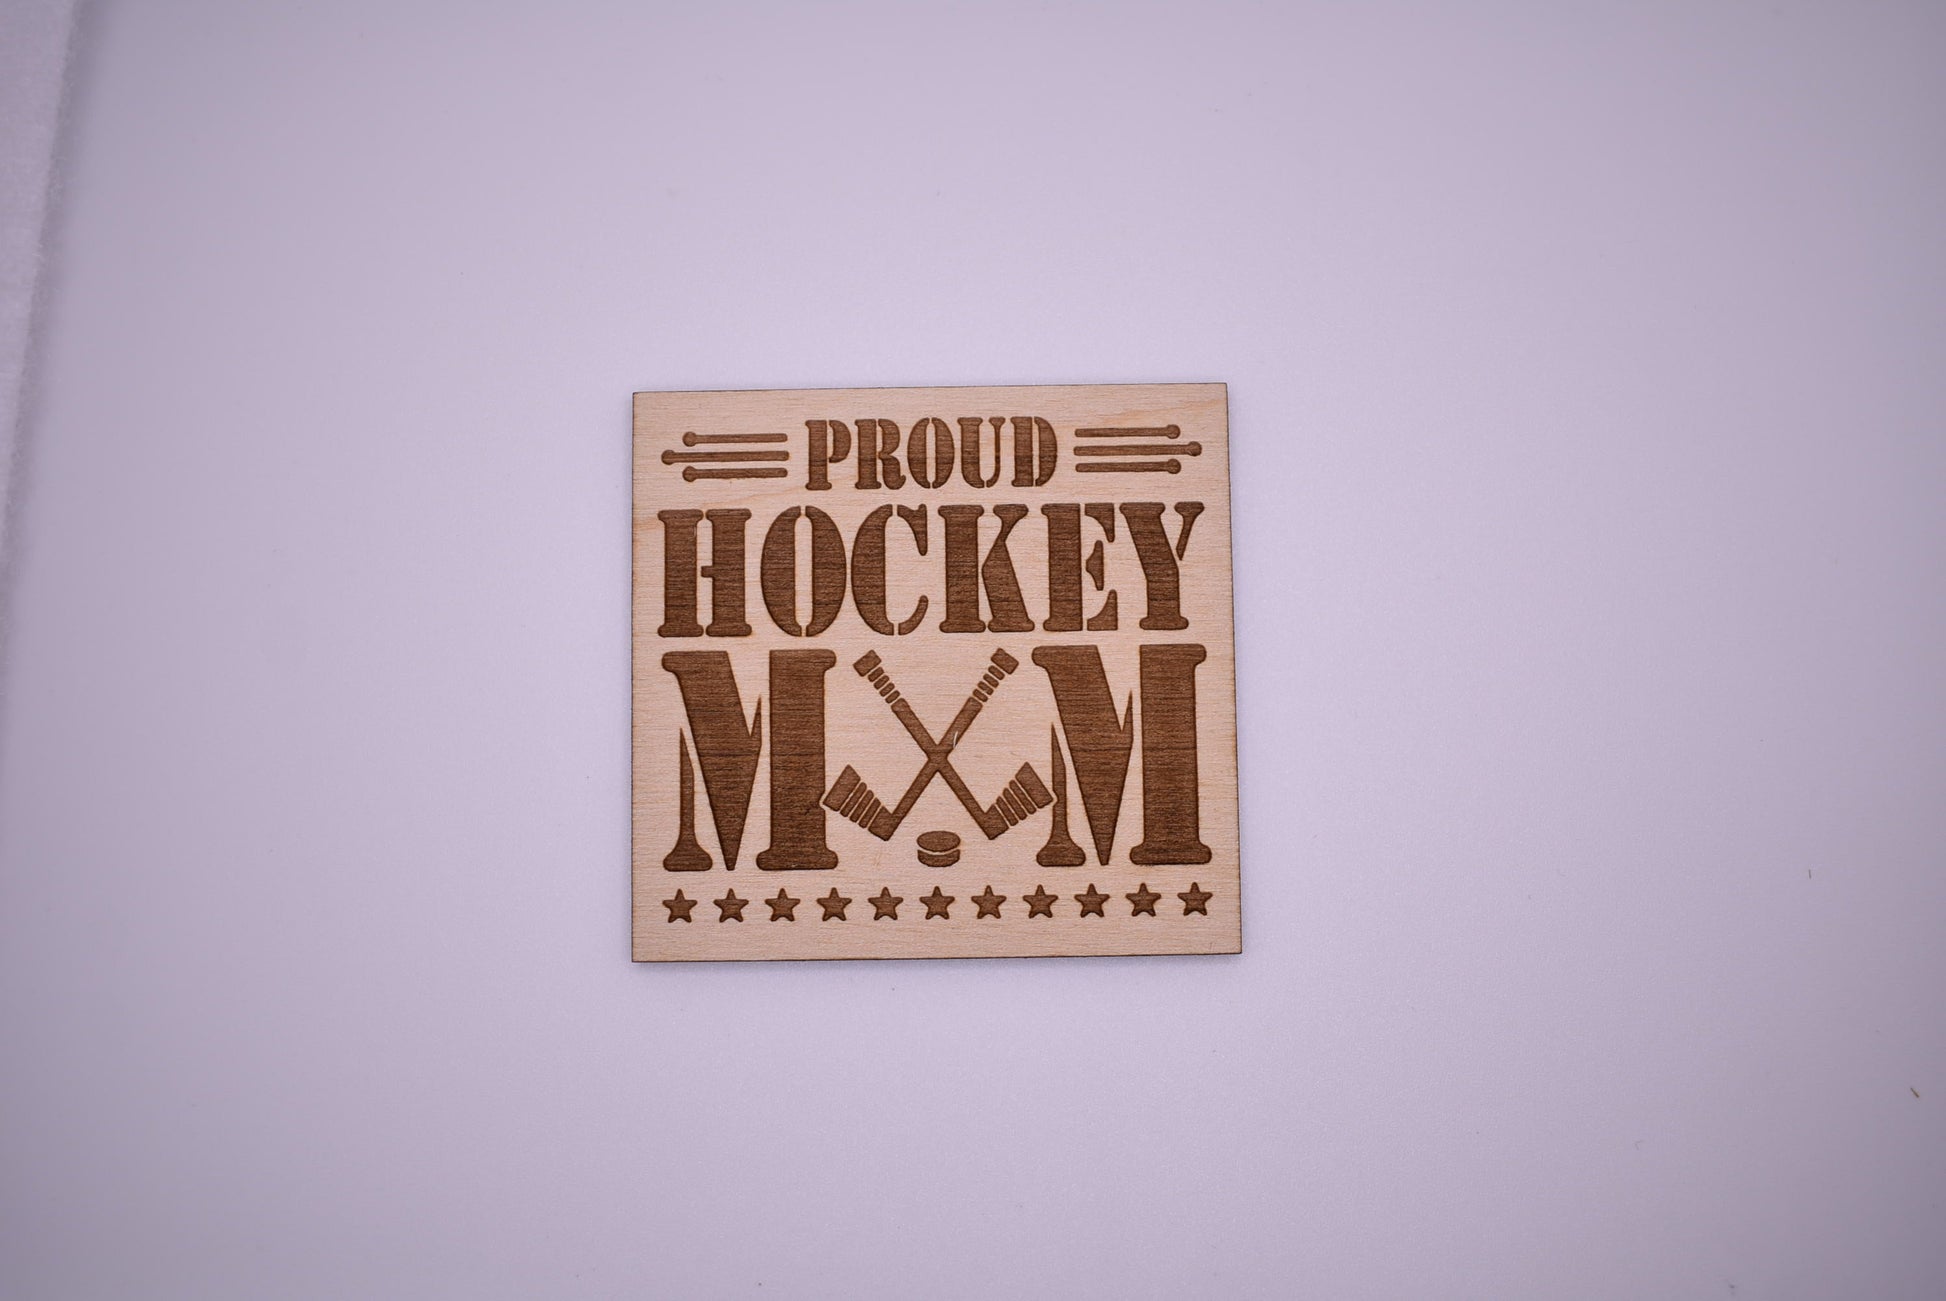 Proud hockey mom - Creative Designs By Kari